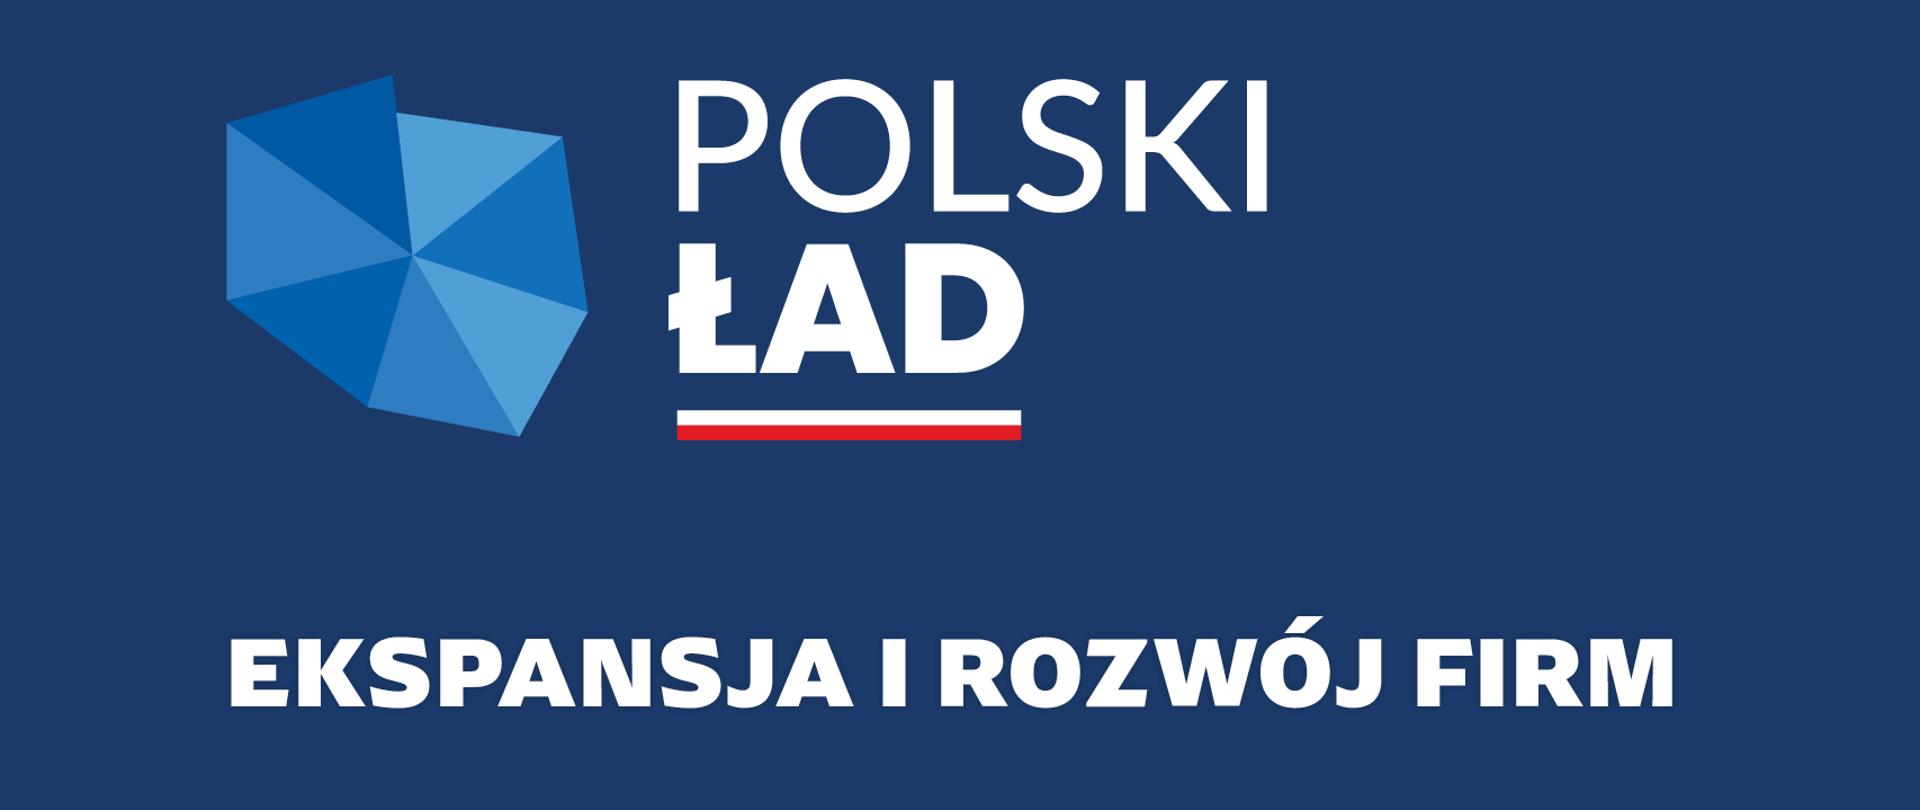 Kontur Polski i napis Polski Ład Ekspansja i rozwój firm 